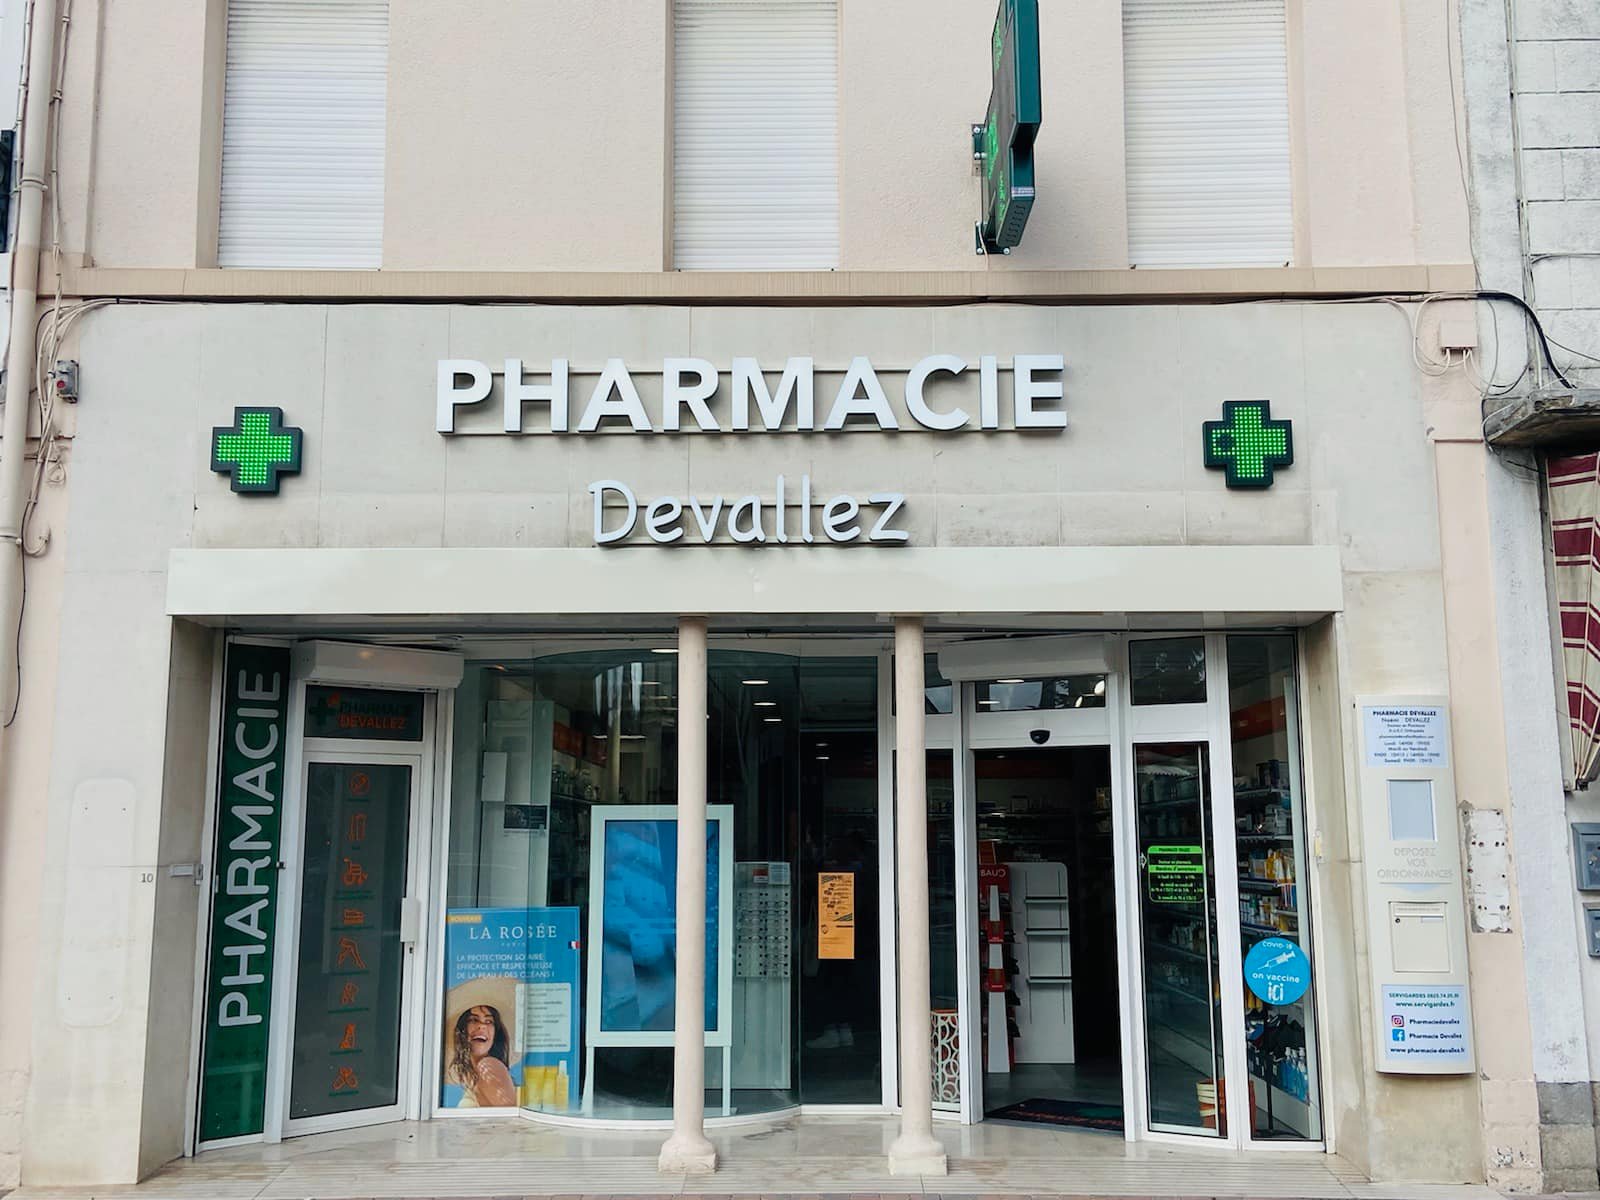 Pharmacie Devallez officine (1)